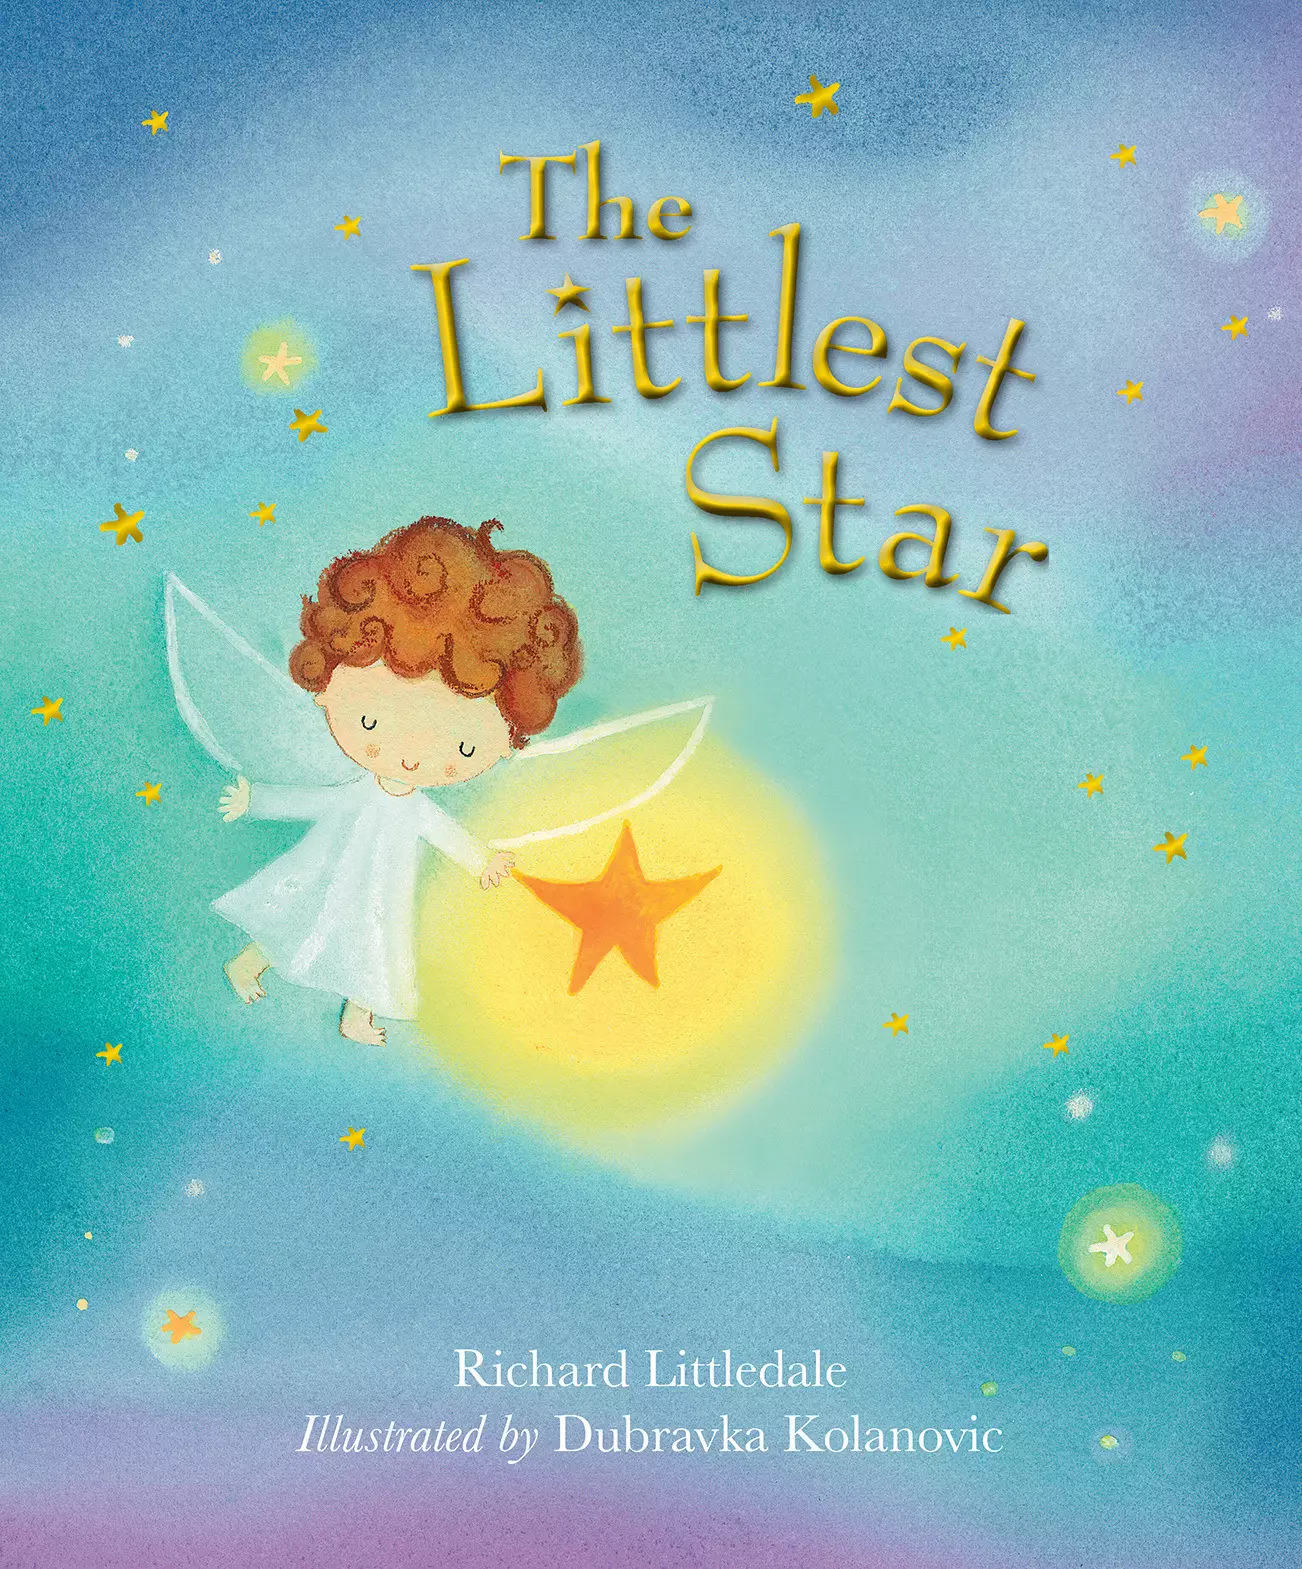 The Littlest Star